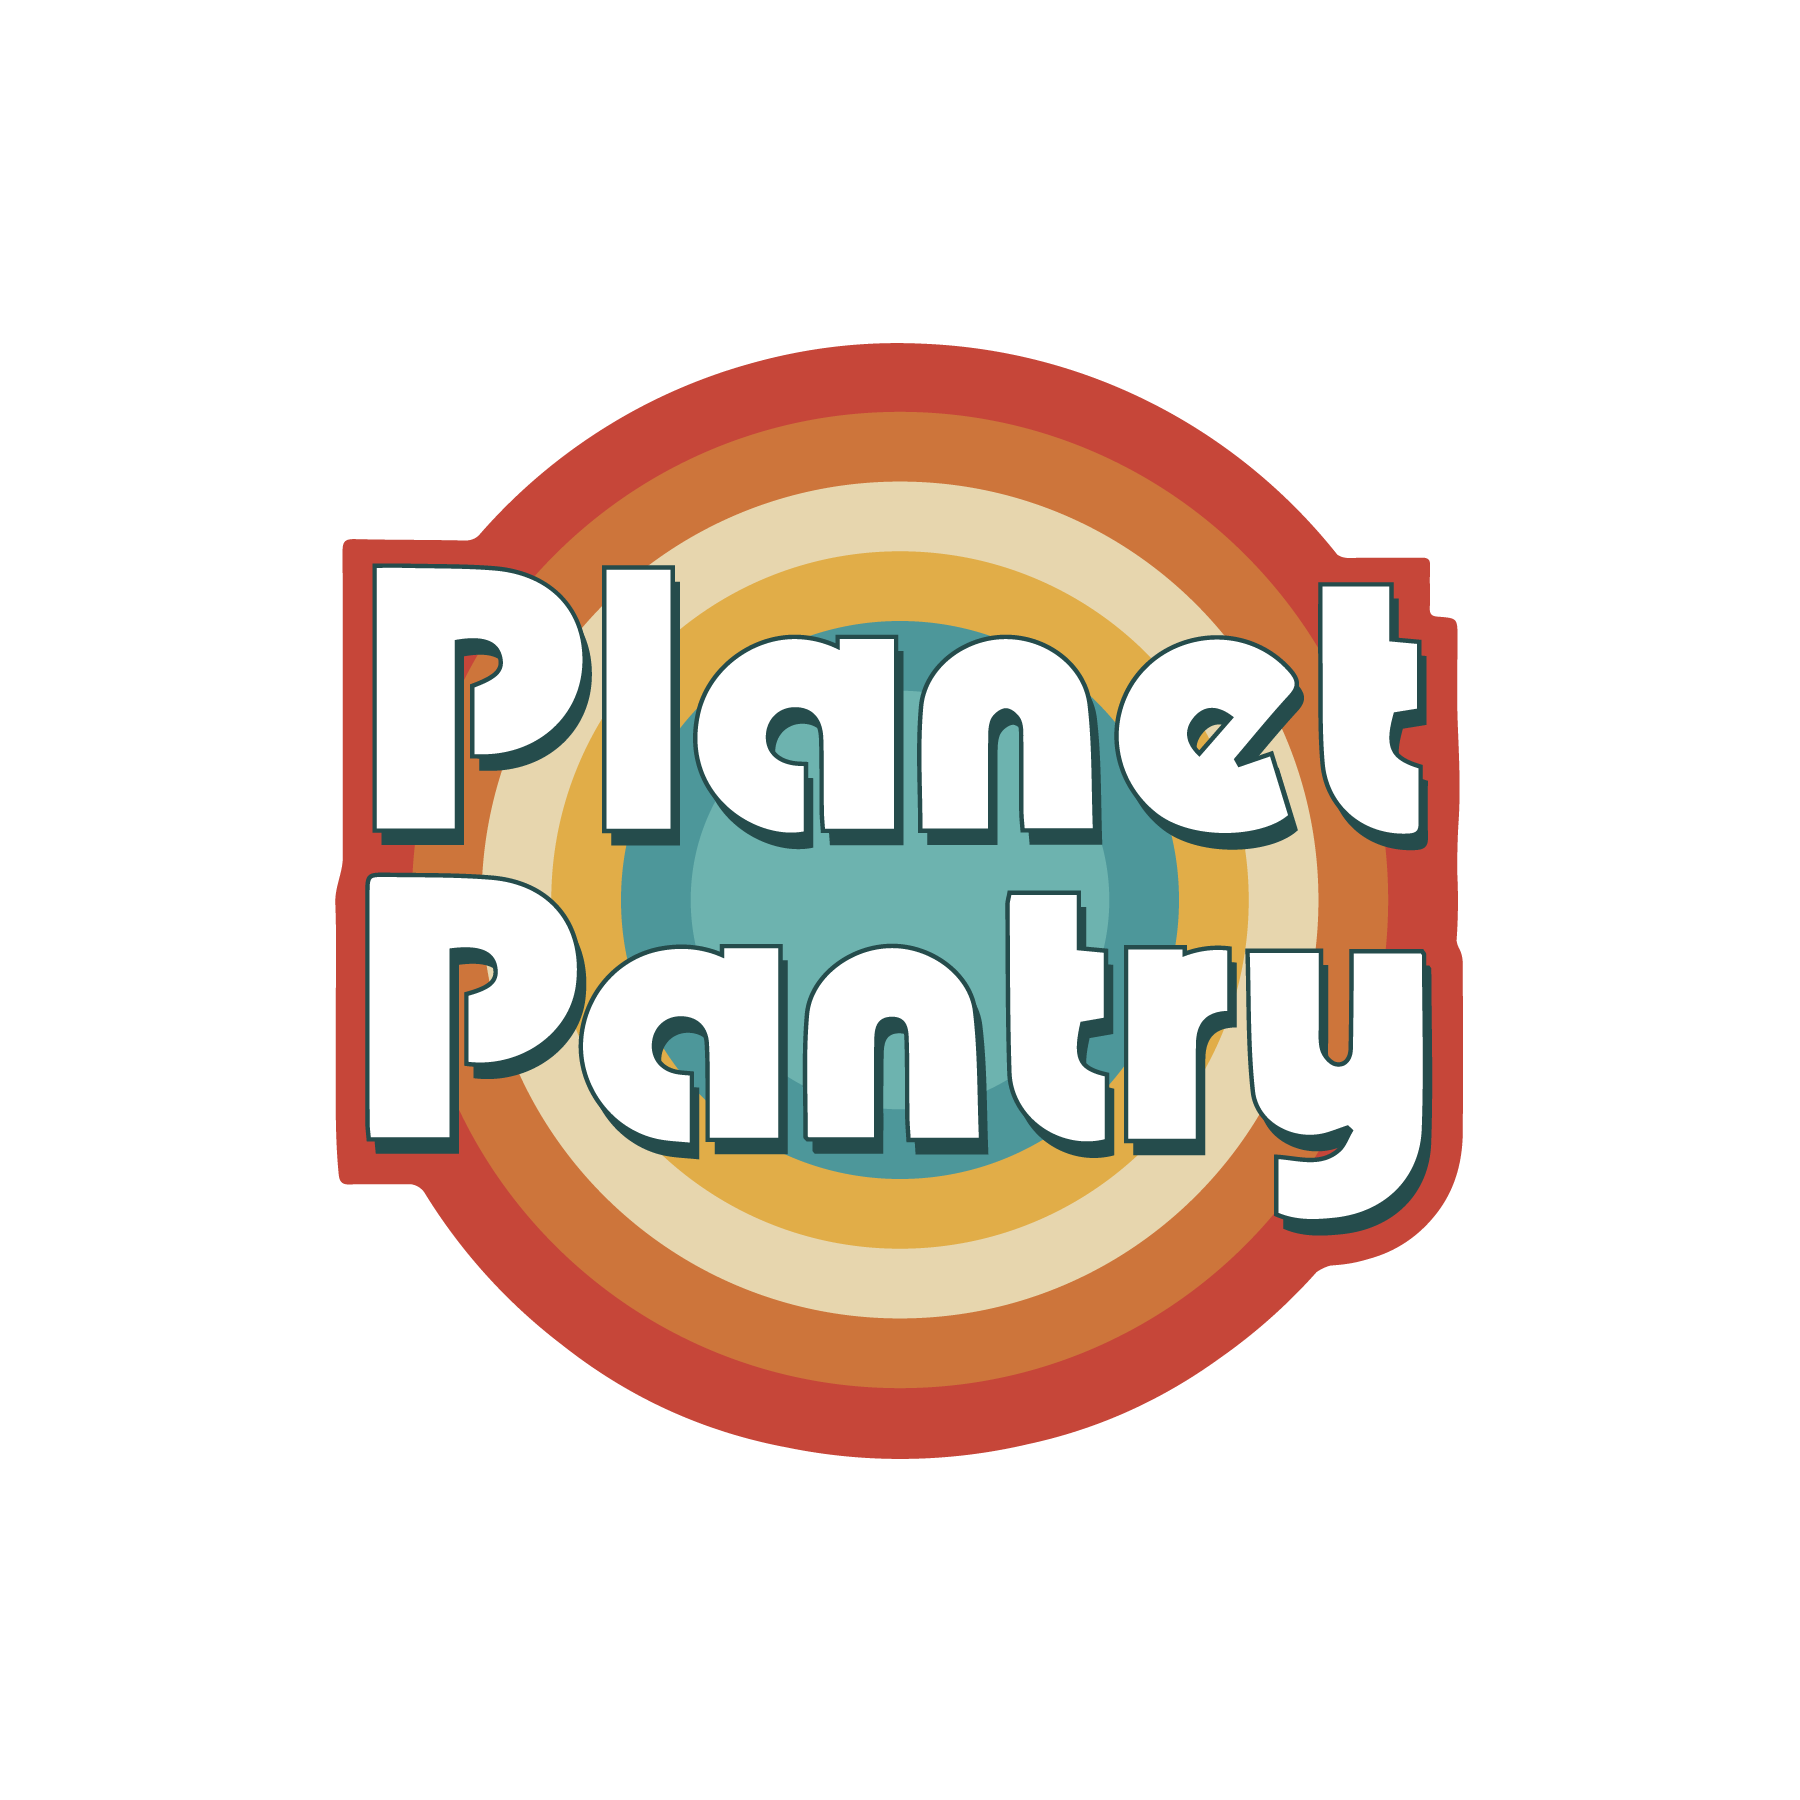 Planet Pantry